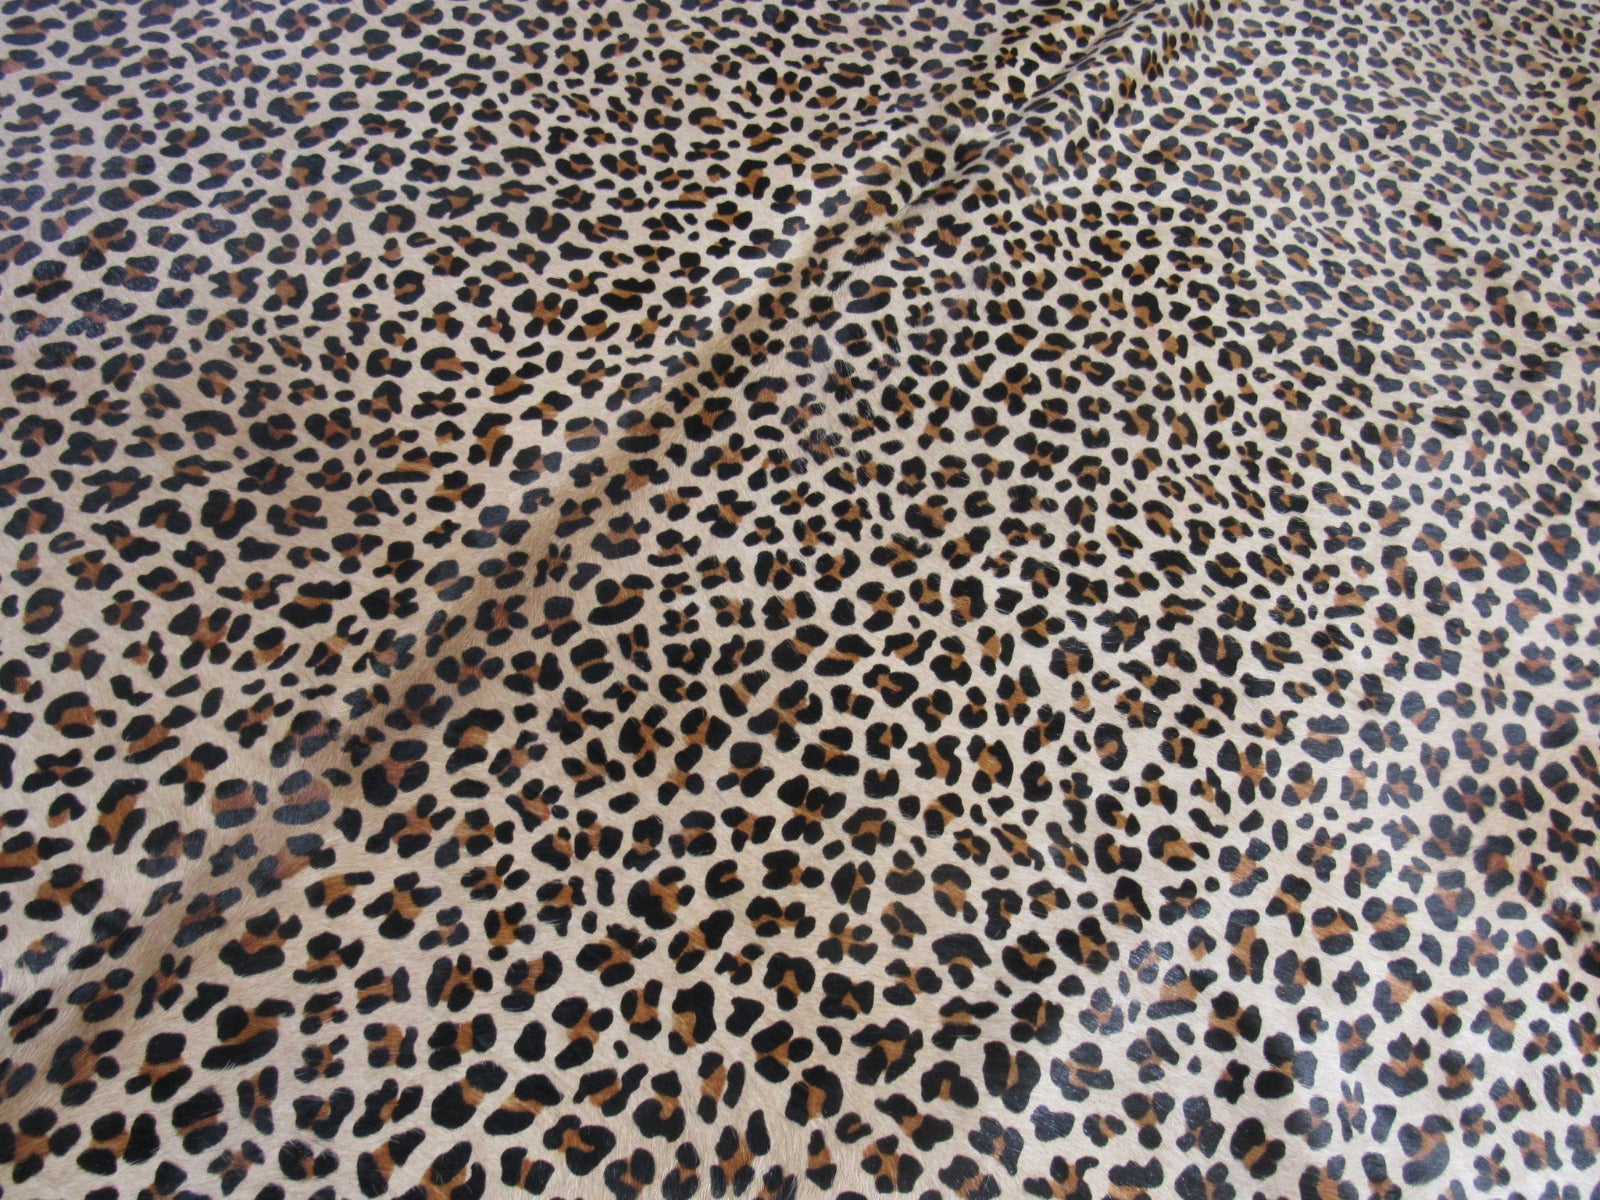 Leopard Print Cowhide Rug Size: 6.5x6.2 feet C-1647